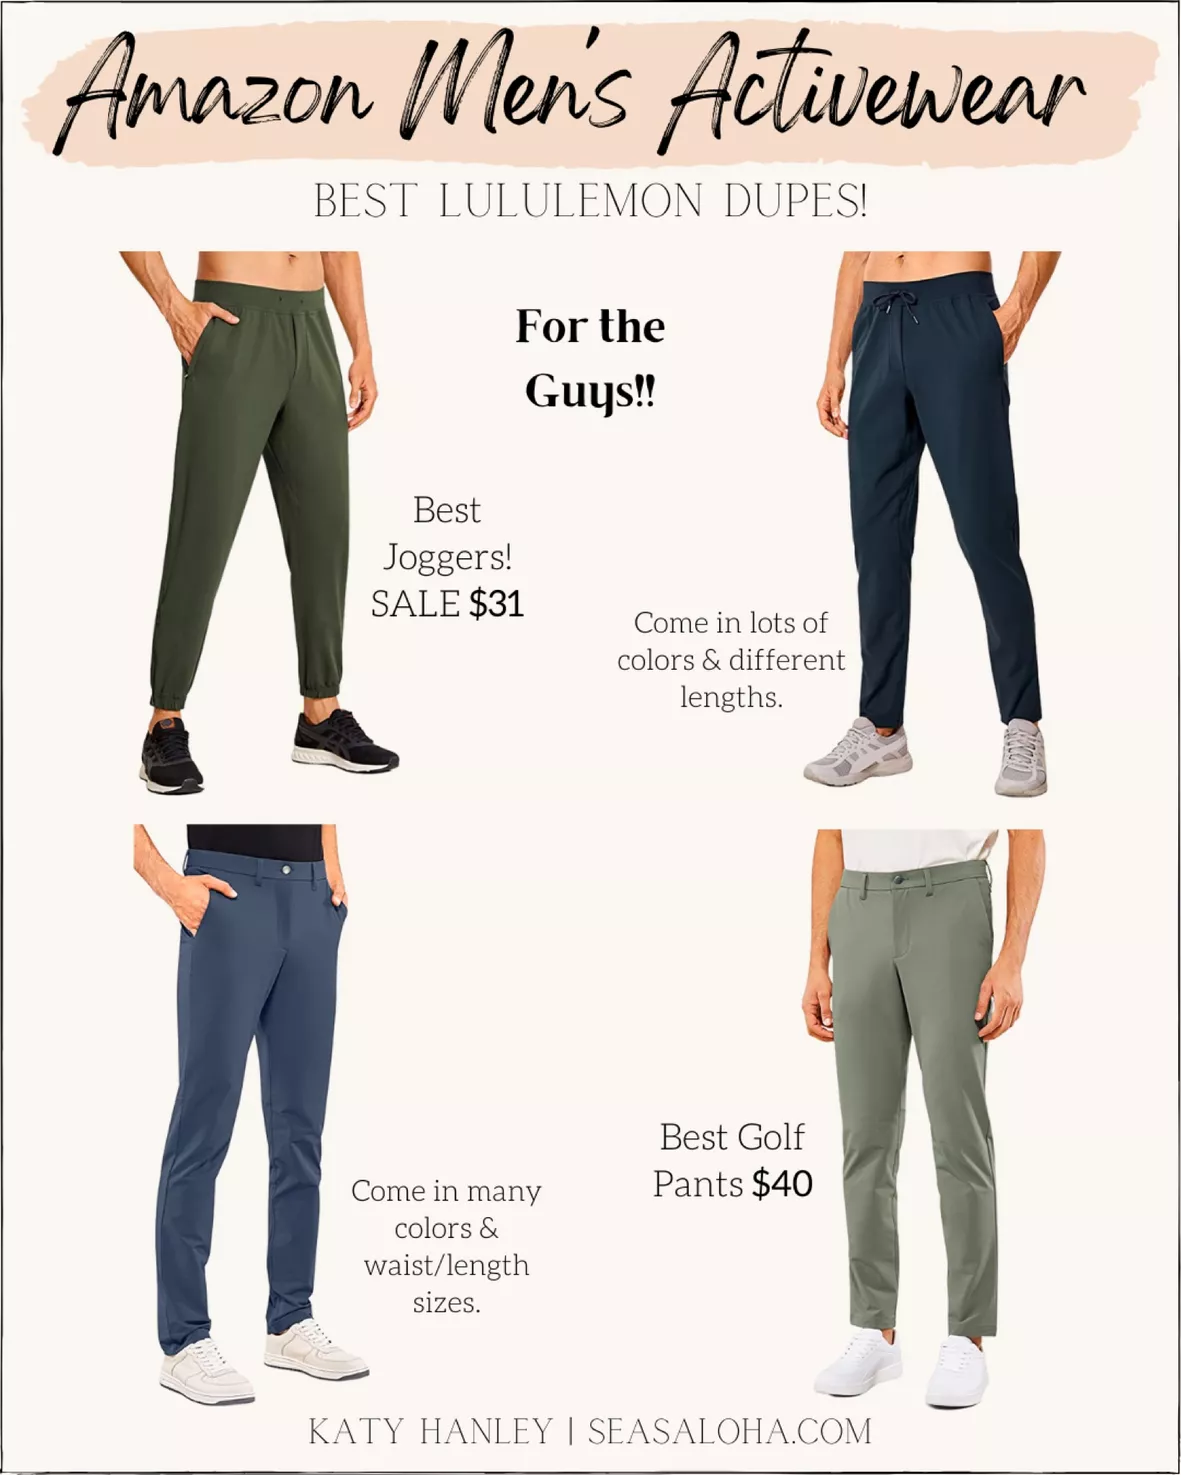 Lululemon Dupes - Straight A Style